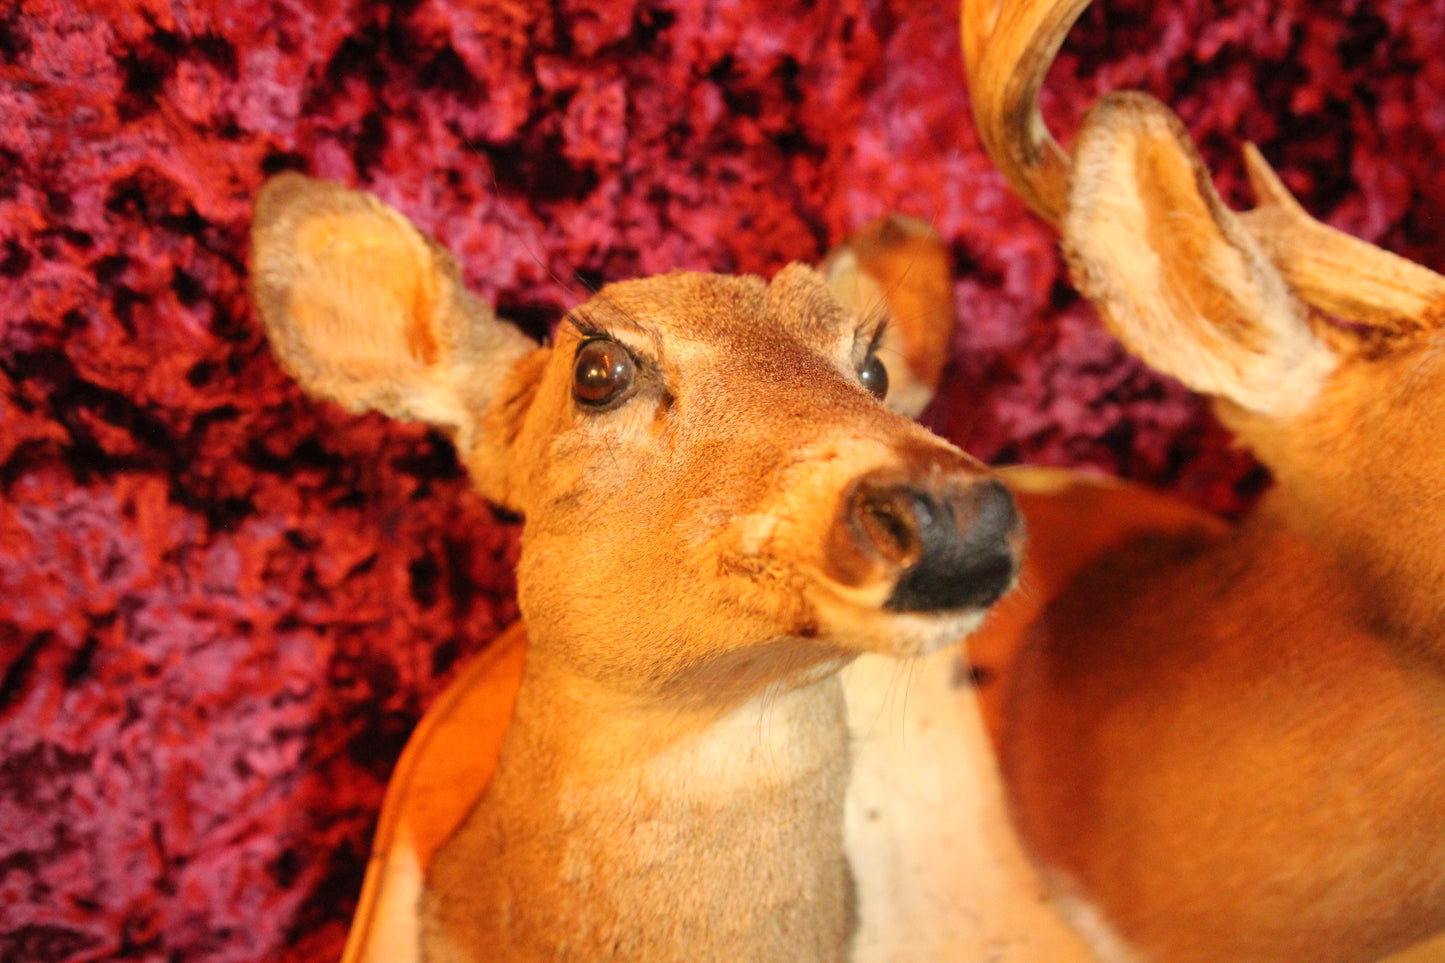 Double Deer Head Vintage Taxidermy Shoulder Mount